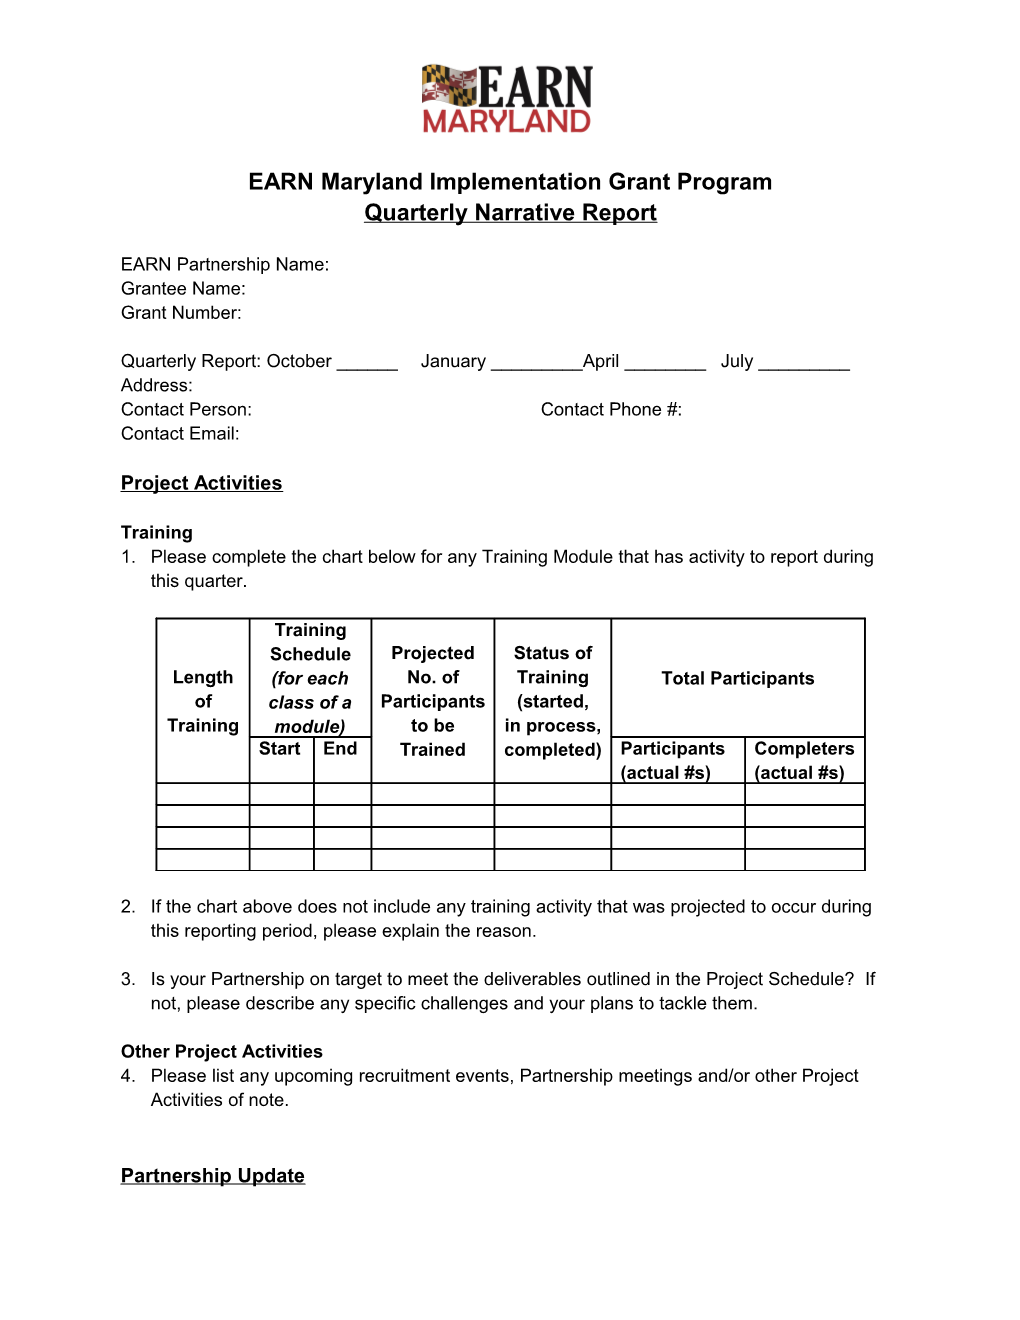 EARN Maryland Implementation Grant Program